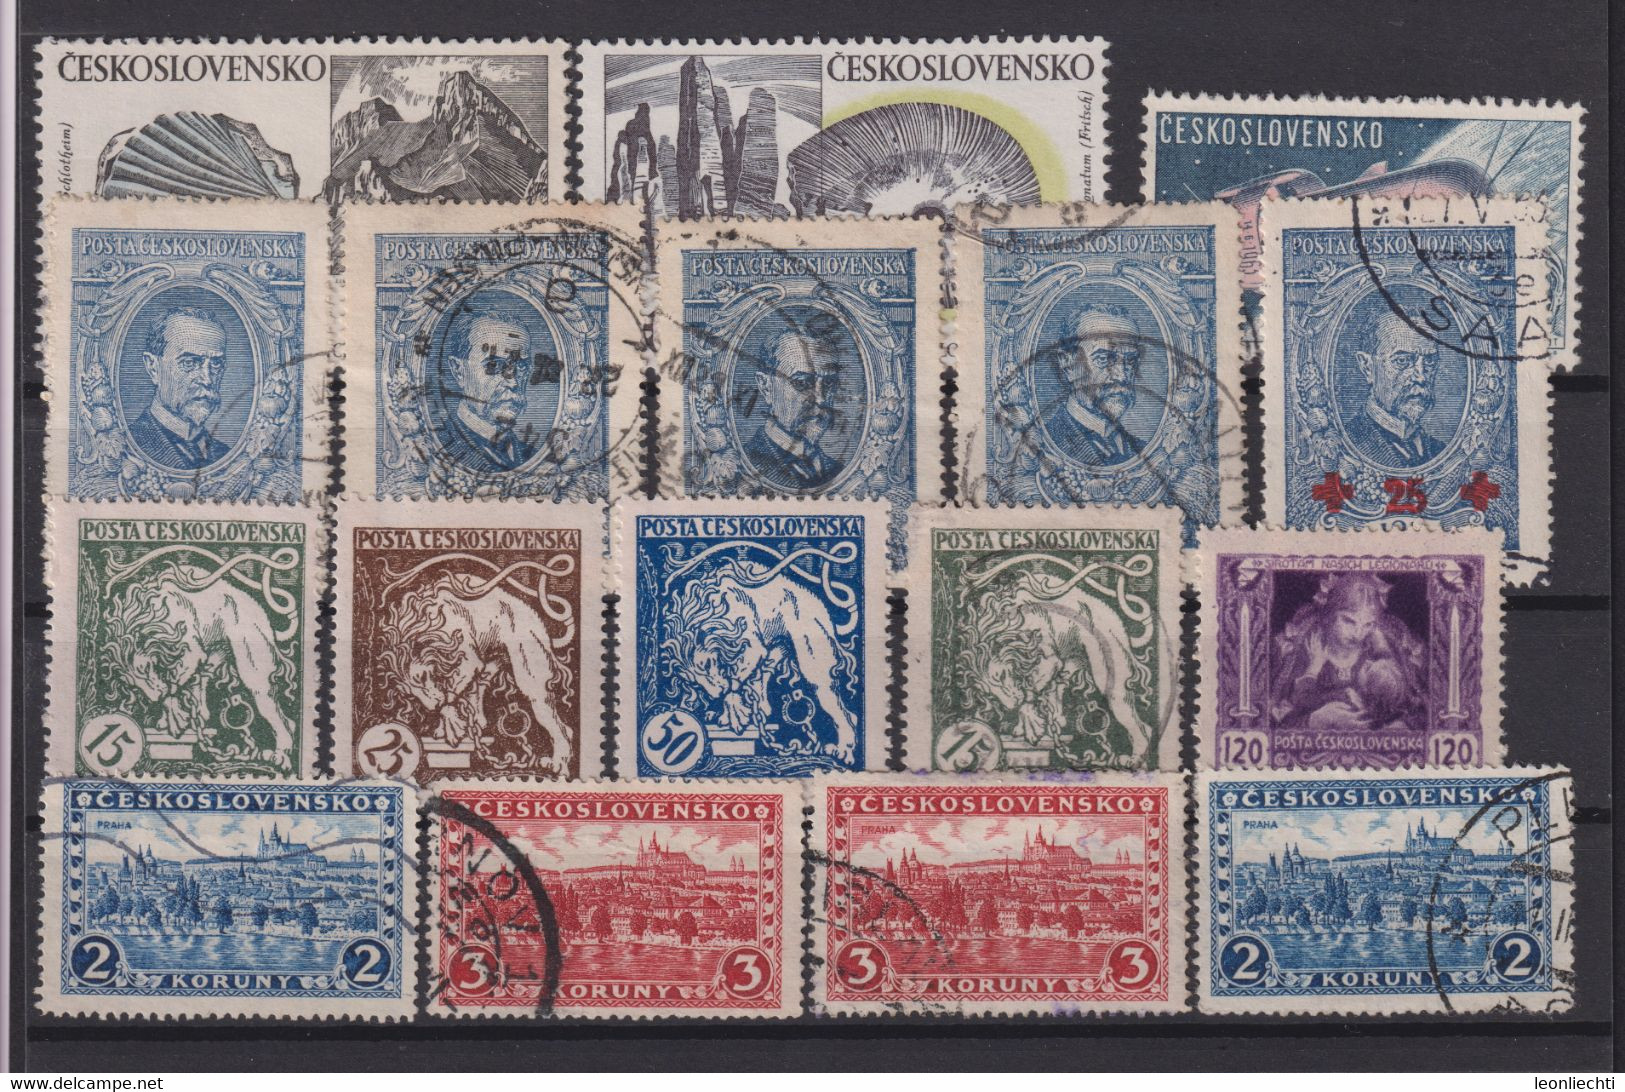 Tschechoslowakei Lot ° Briefmarken Gestempelt /  Stamps Stamped /  Timbres Oblitérés - Collections, Lots & Séries